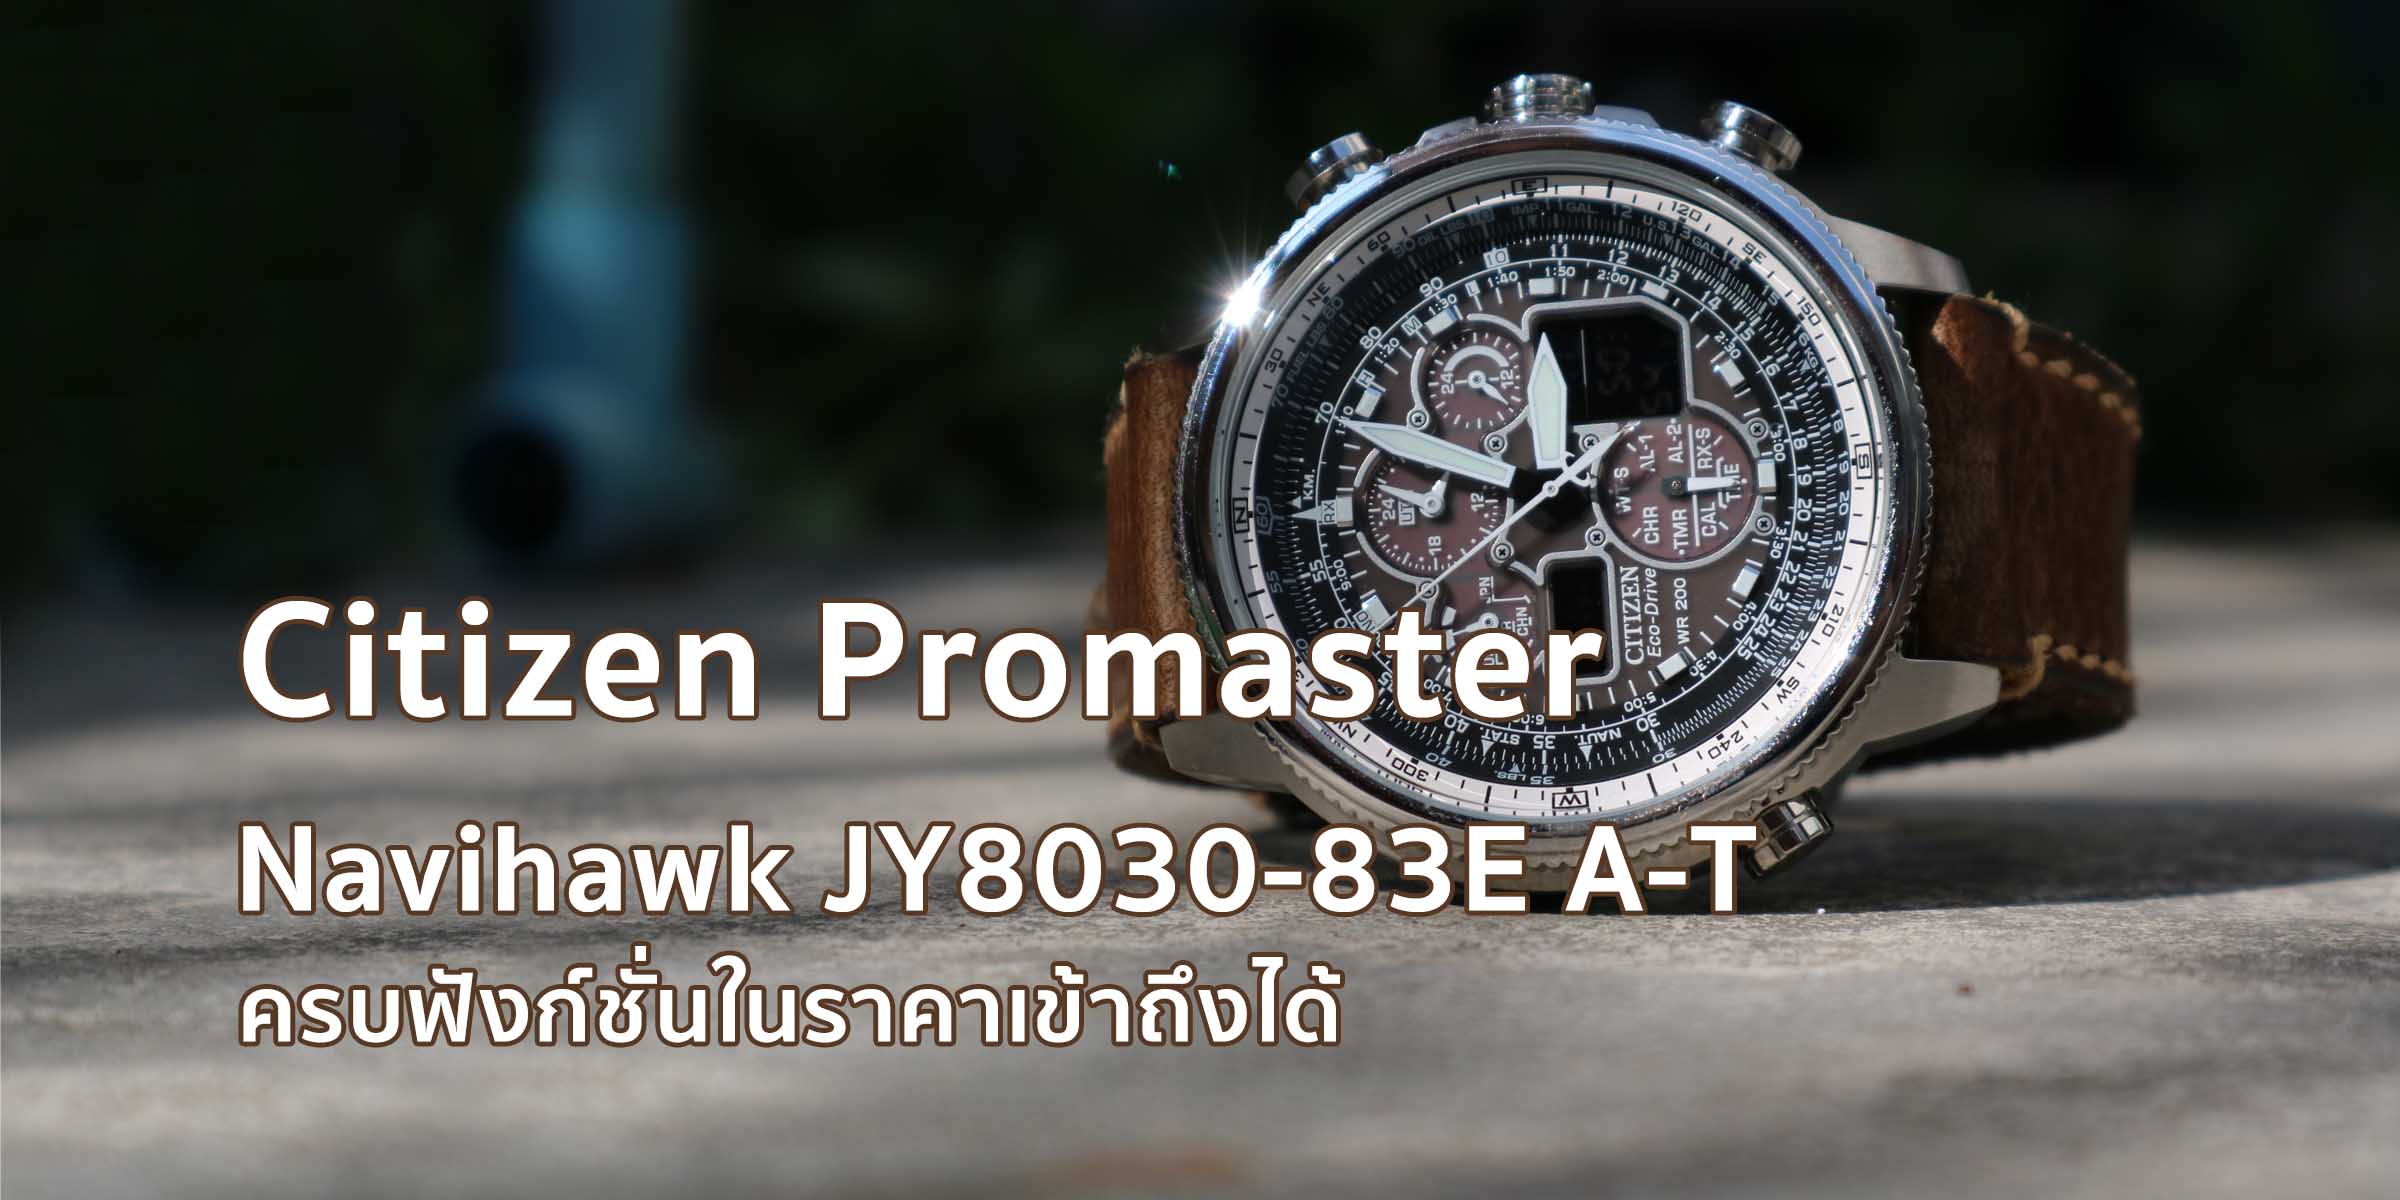 Citizen Promaster Navihawk JY8030-83E A-T